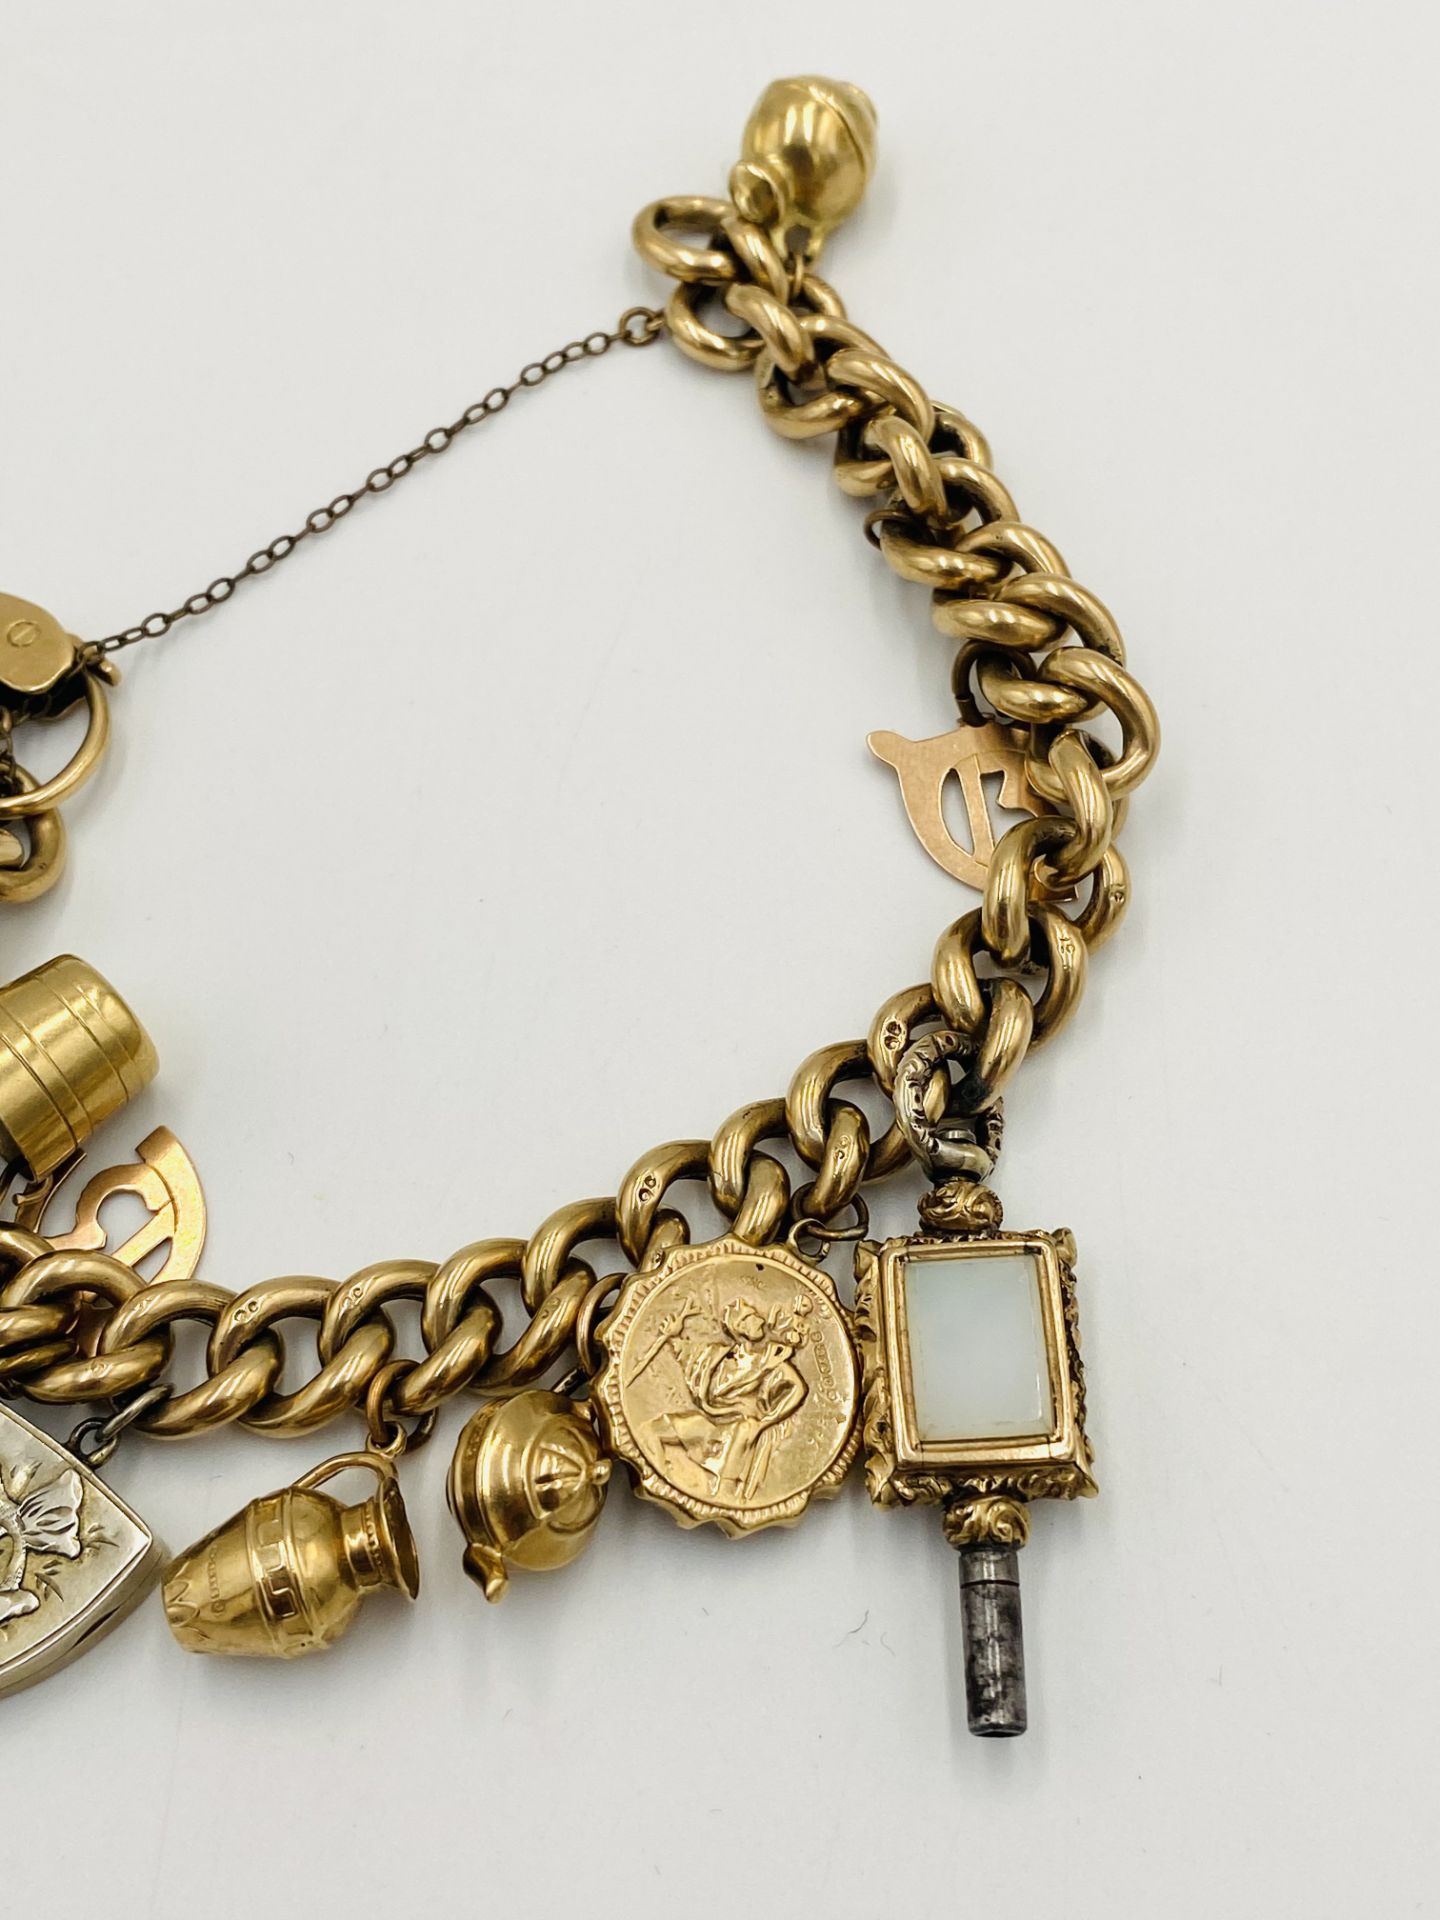 9ct gold charm bracelet - Image 4 of 4